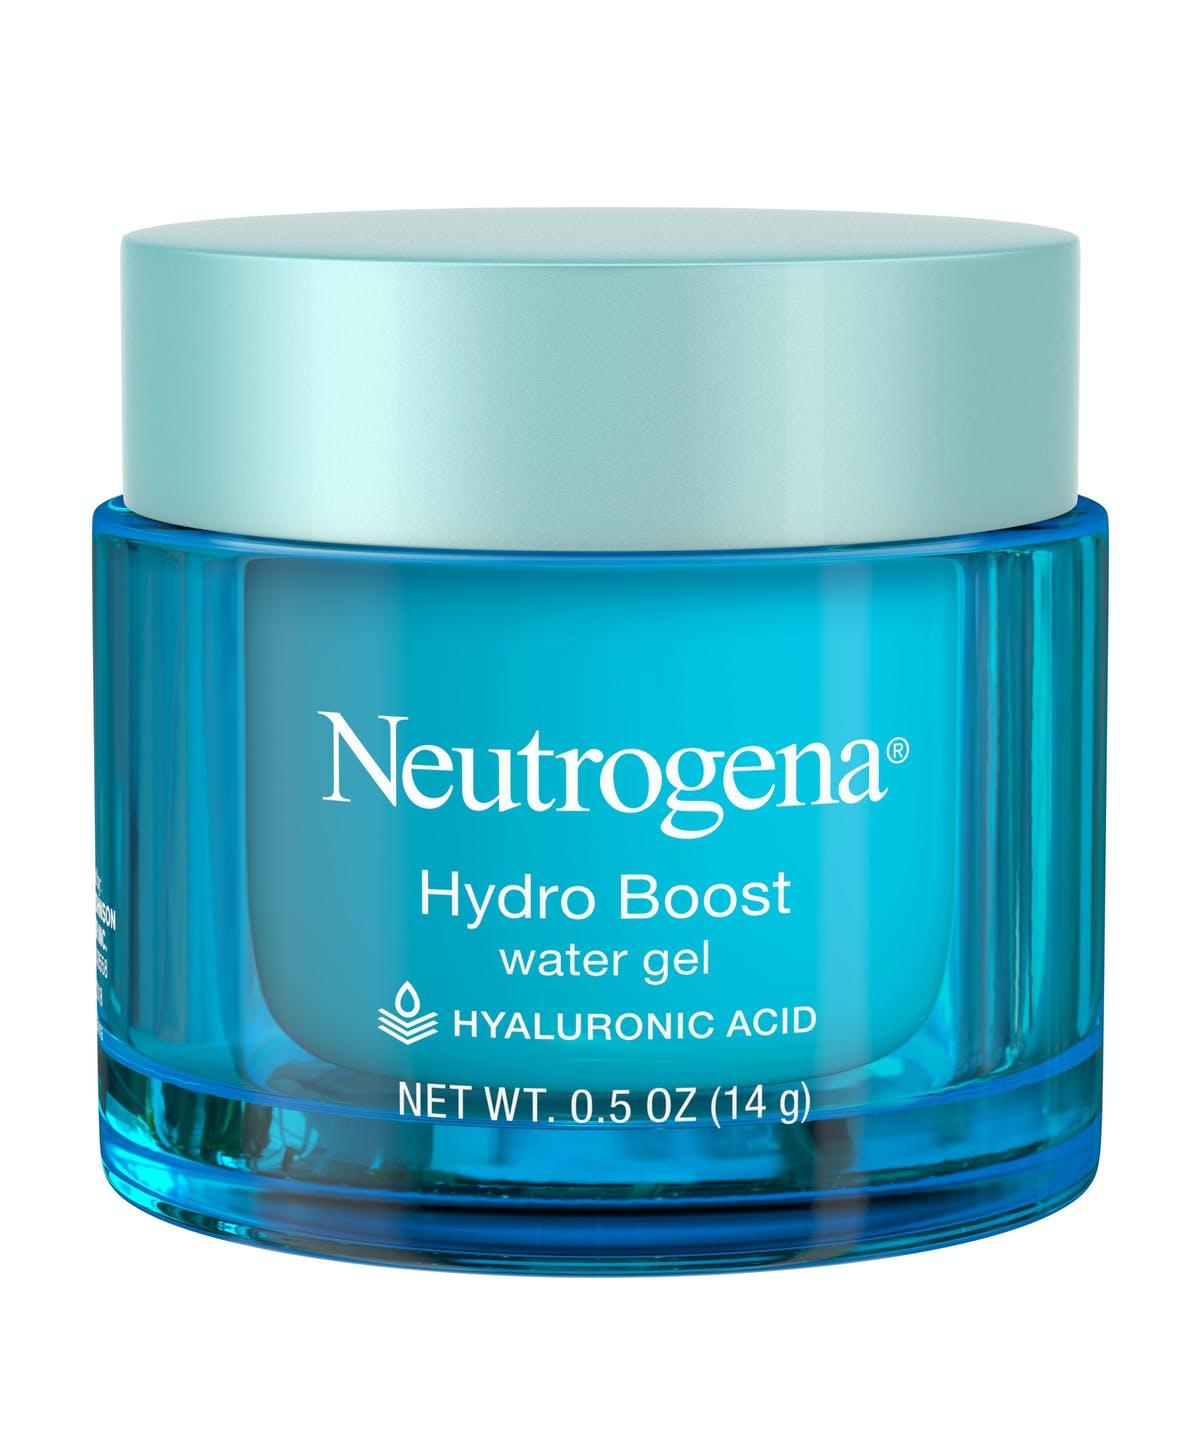 Neutrogena Hydro Boost Water Gel 14g